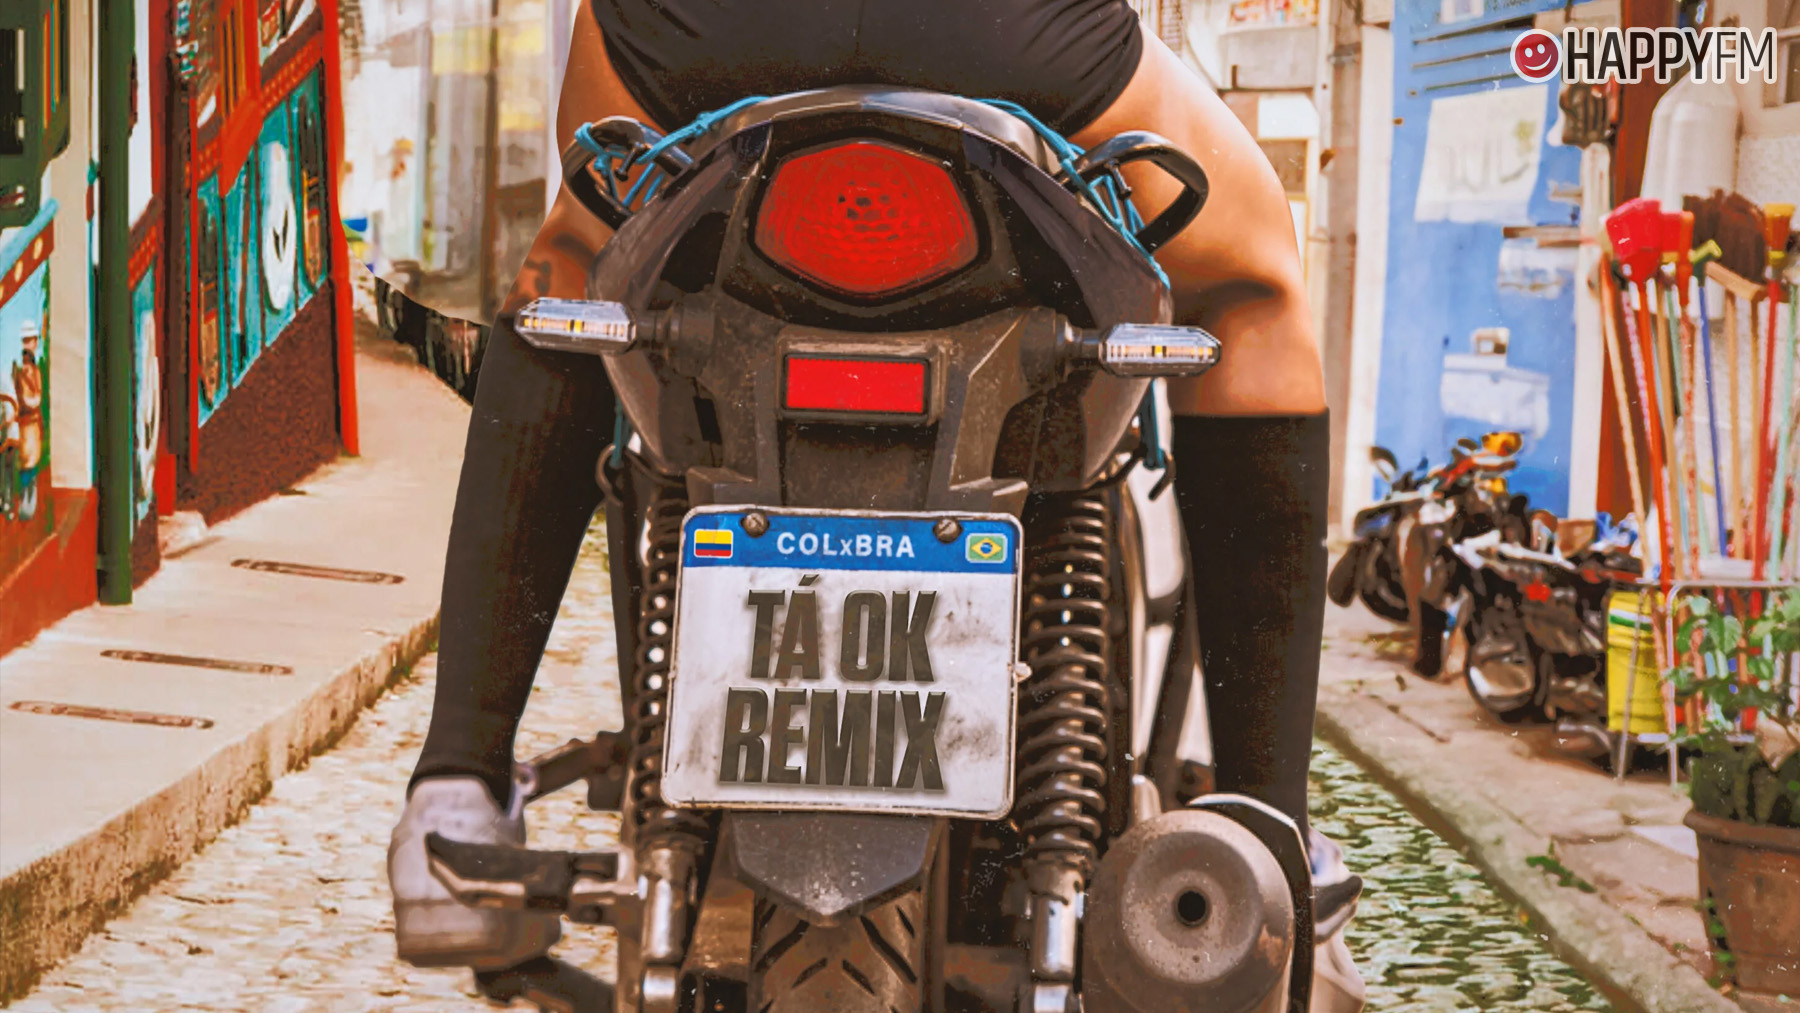 ‘Tá OK (Remix)’, de DENNIS, MC Kevin o Chris, Maluma y Karol G: letra y vídeo